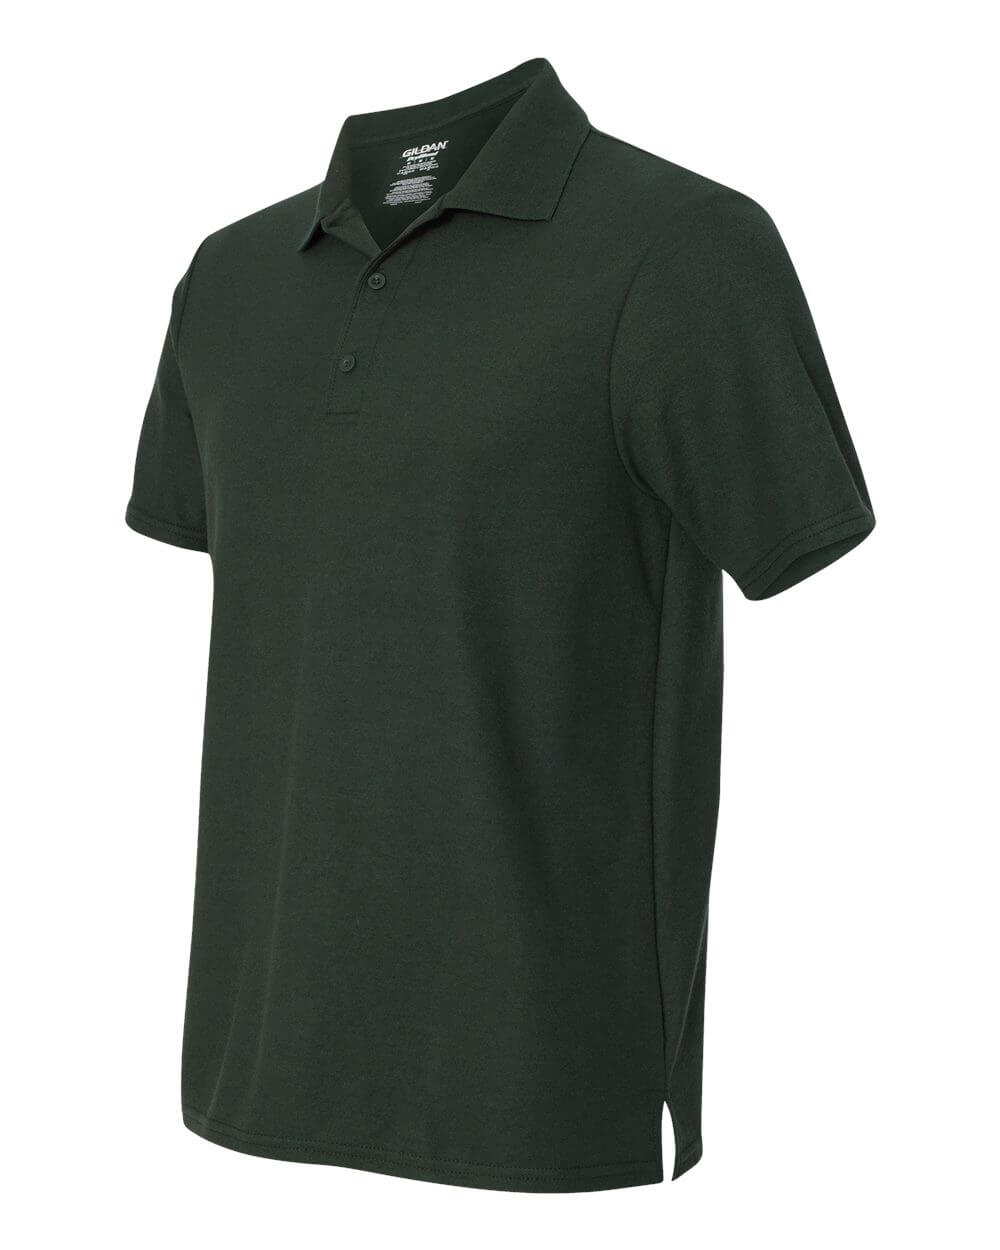 Inmate Clothing: Shirts - Pique Knit Sport Shirts - Charm-Tex